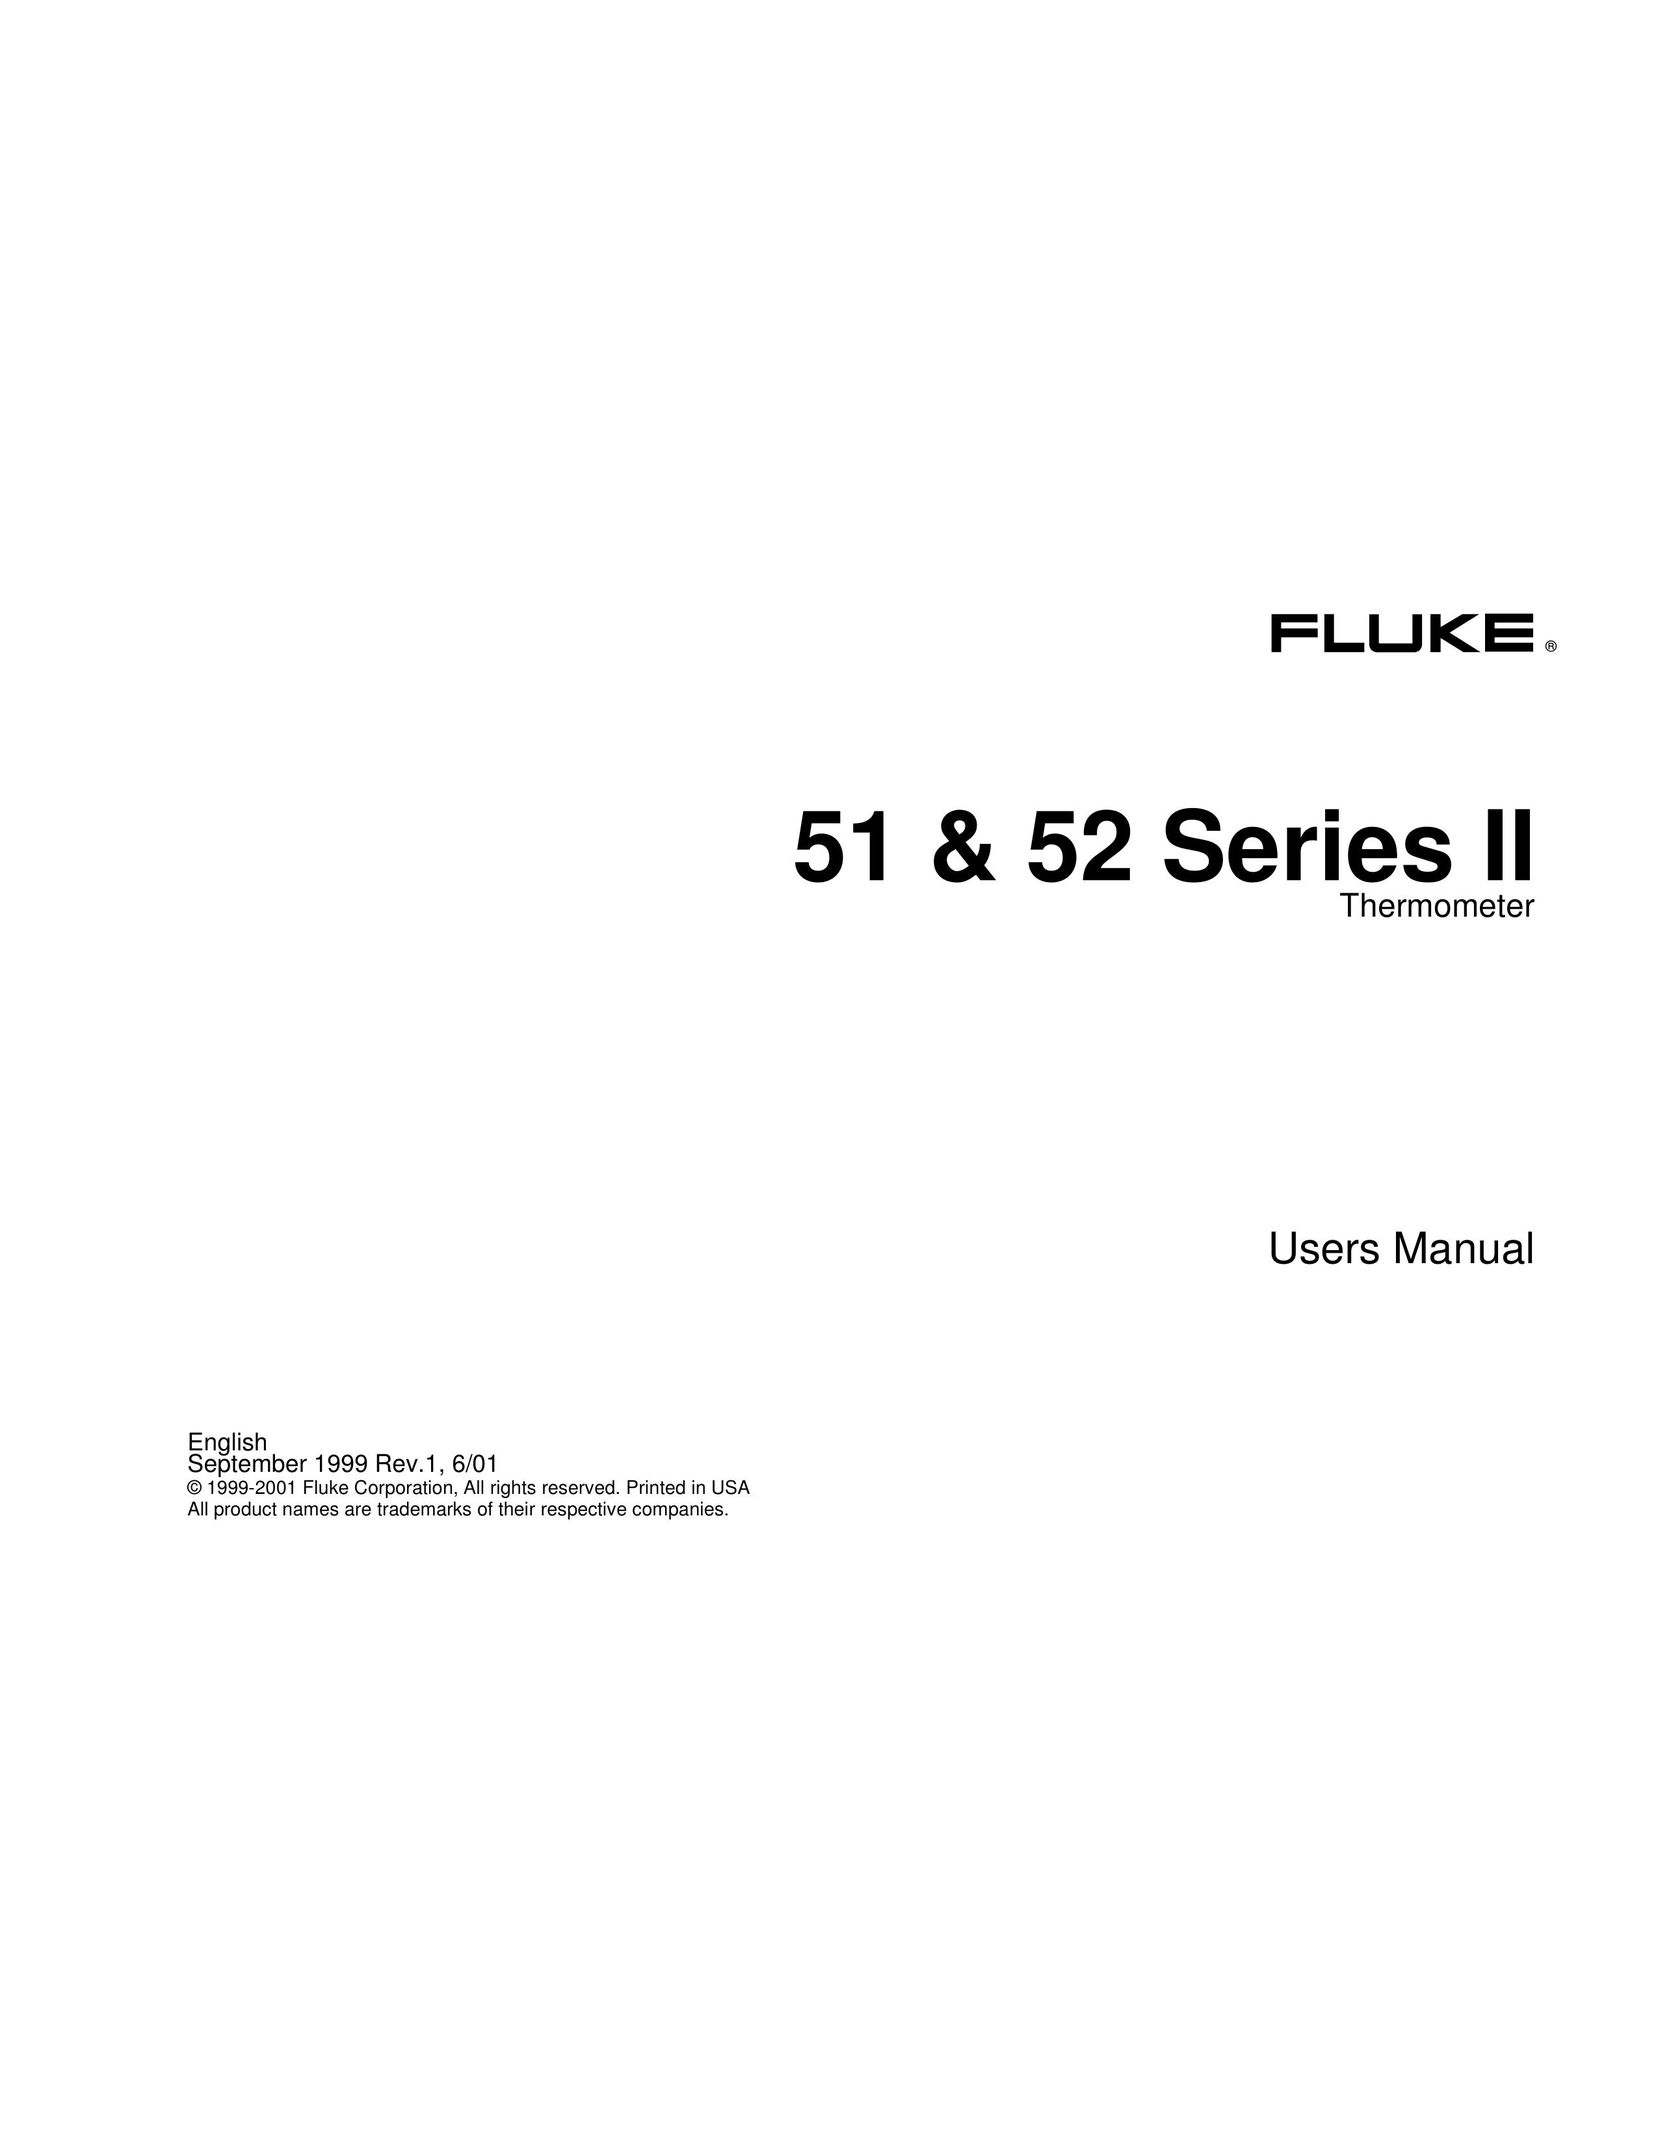 Fluke 52 Series Thermostat User Manual